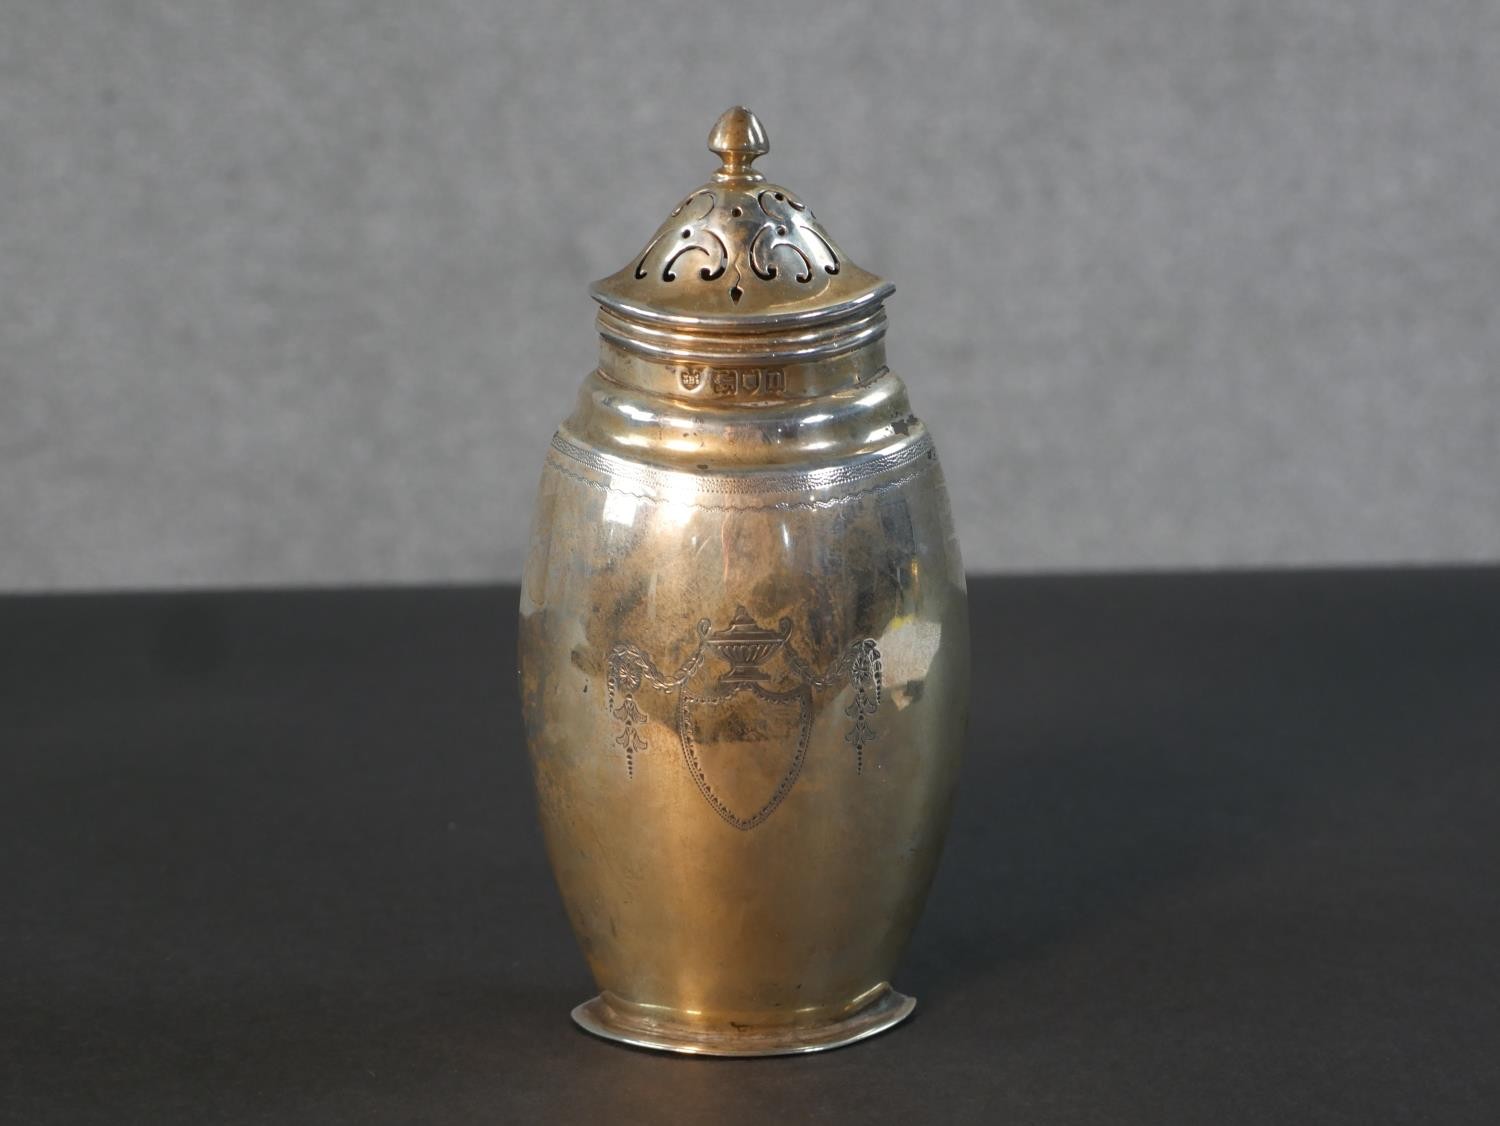 An Edwardian sterling silver urn form sugar sifter by Edward Barnard & Sons Ltd. Hallmarked: London,